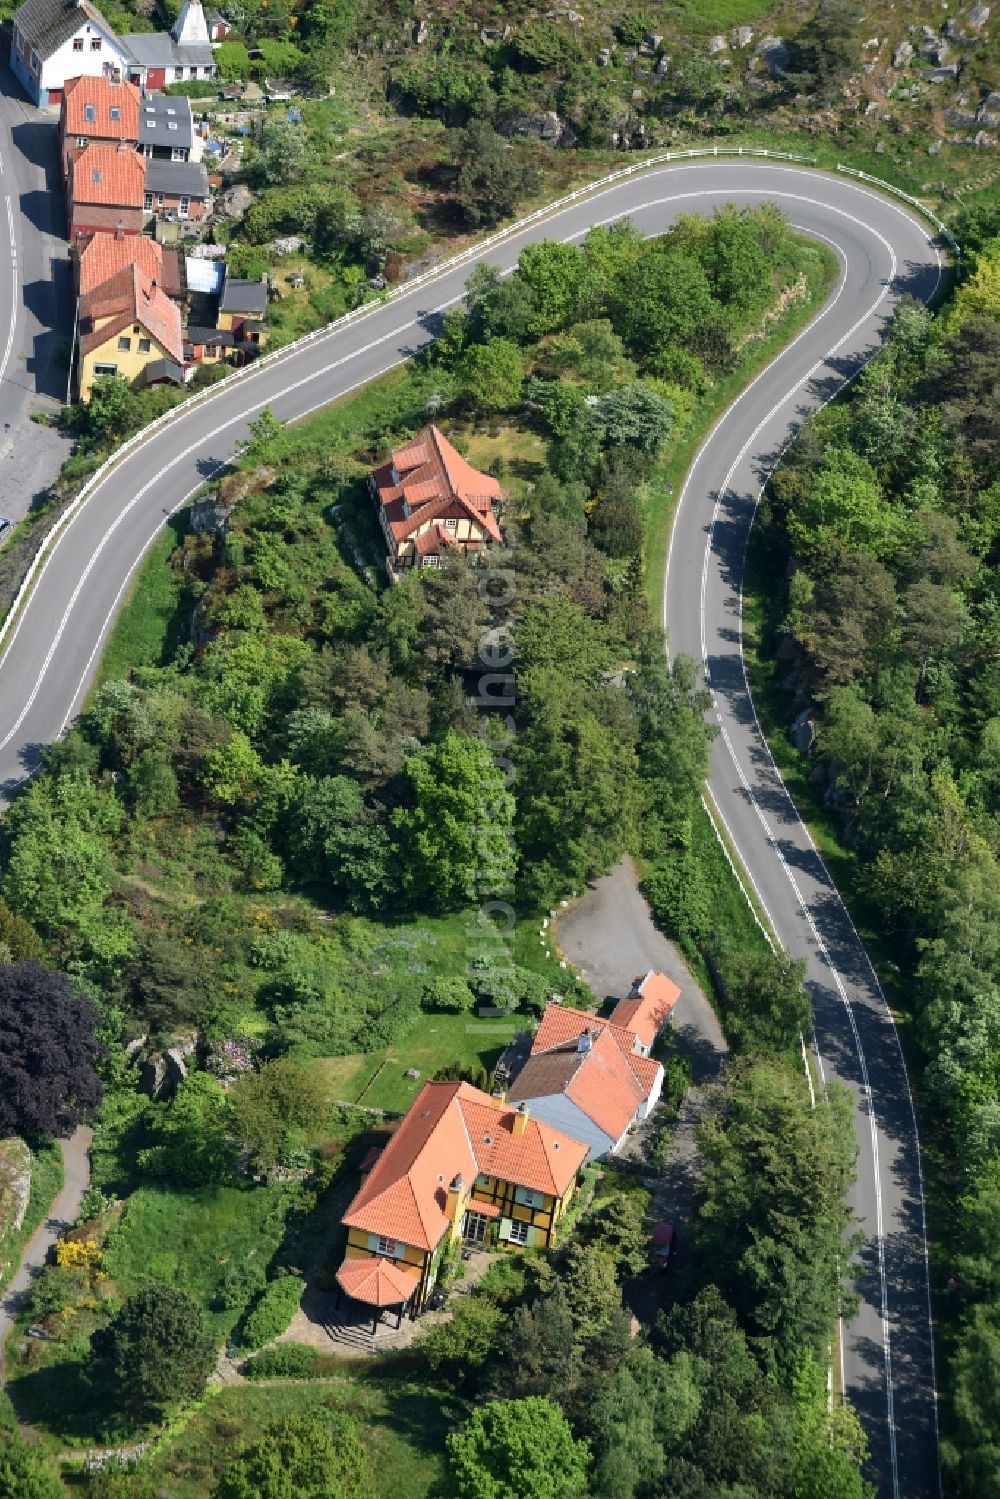 Gudhjem von oben - Serpentinenförmiger Kurvenverlauf der Straßenführung Norresand in Gudhjem in Region Hovedstaden, Dänemark